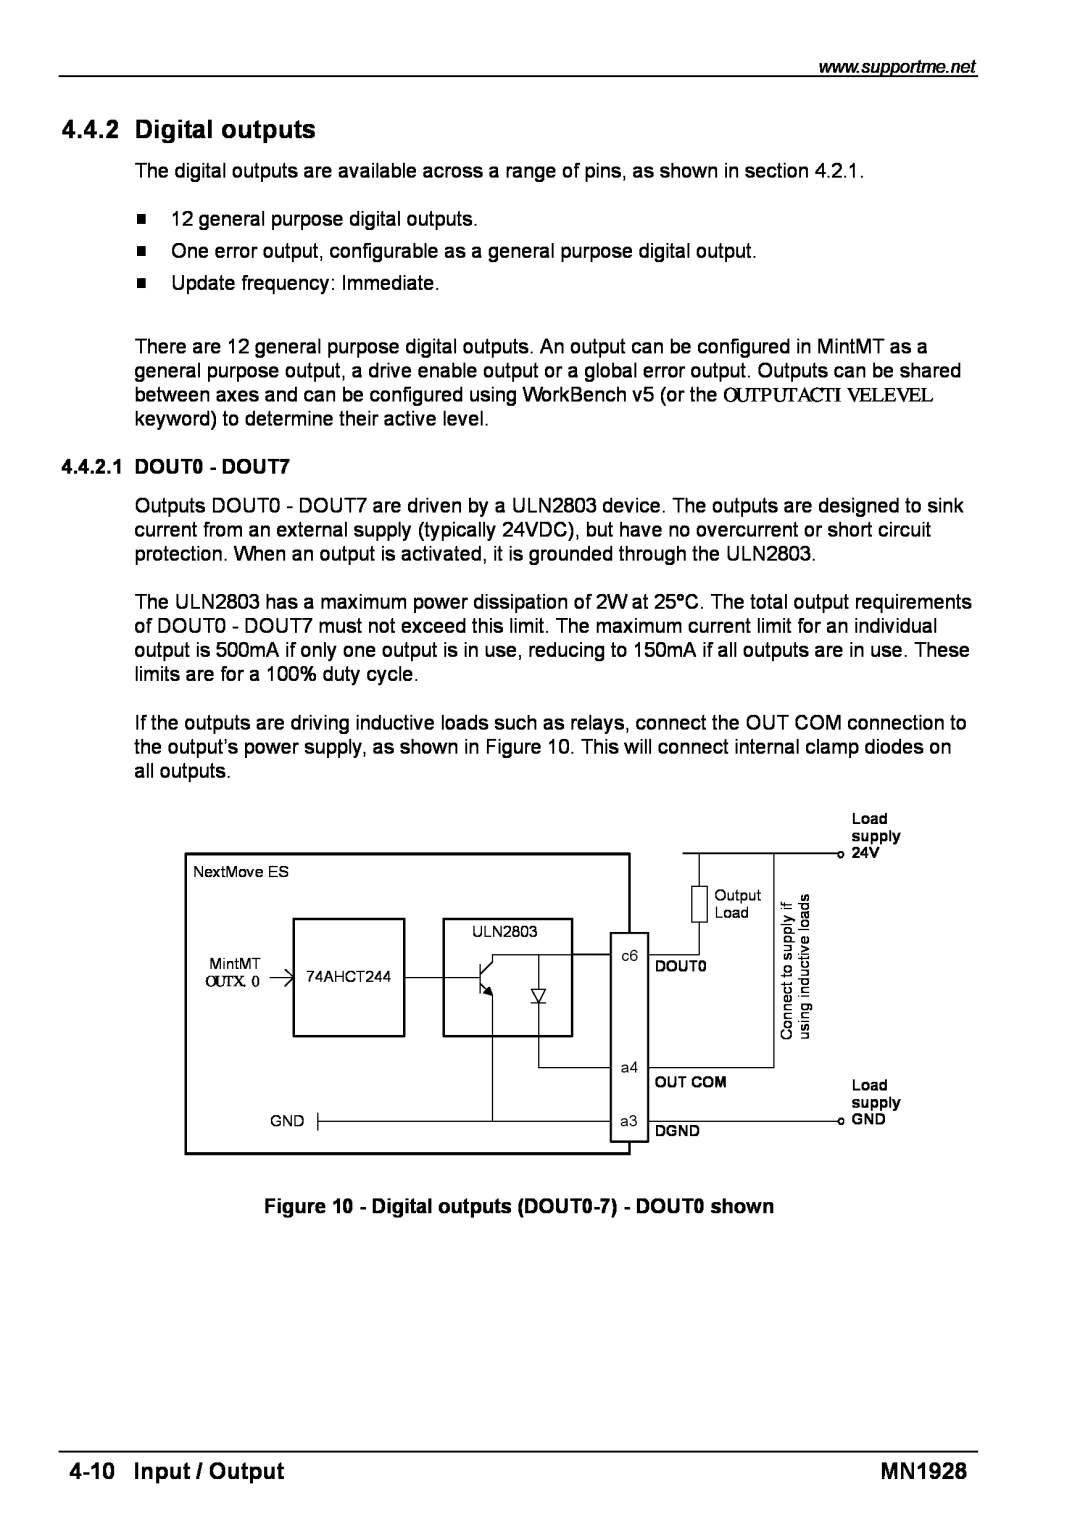 Baldor MN1928 installation manual Input / Output, DOUT0 - DOUT7, Digital outputs DOUT0-7 - DOUT0 shown 